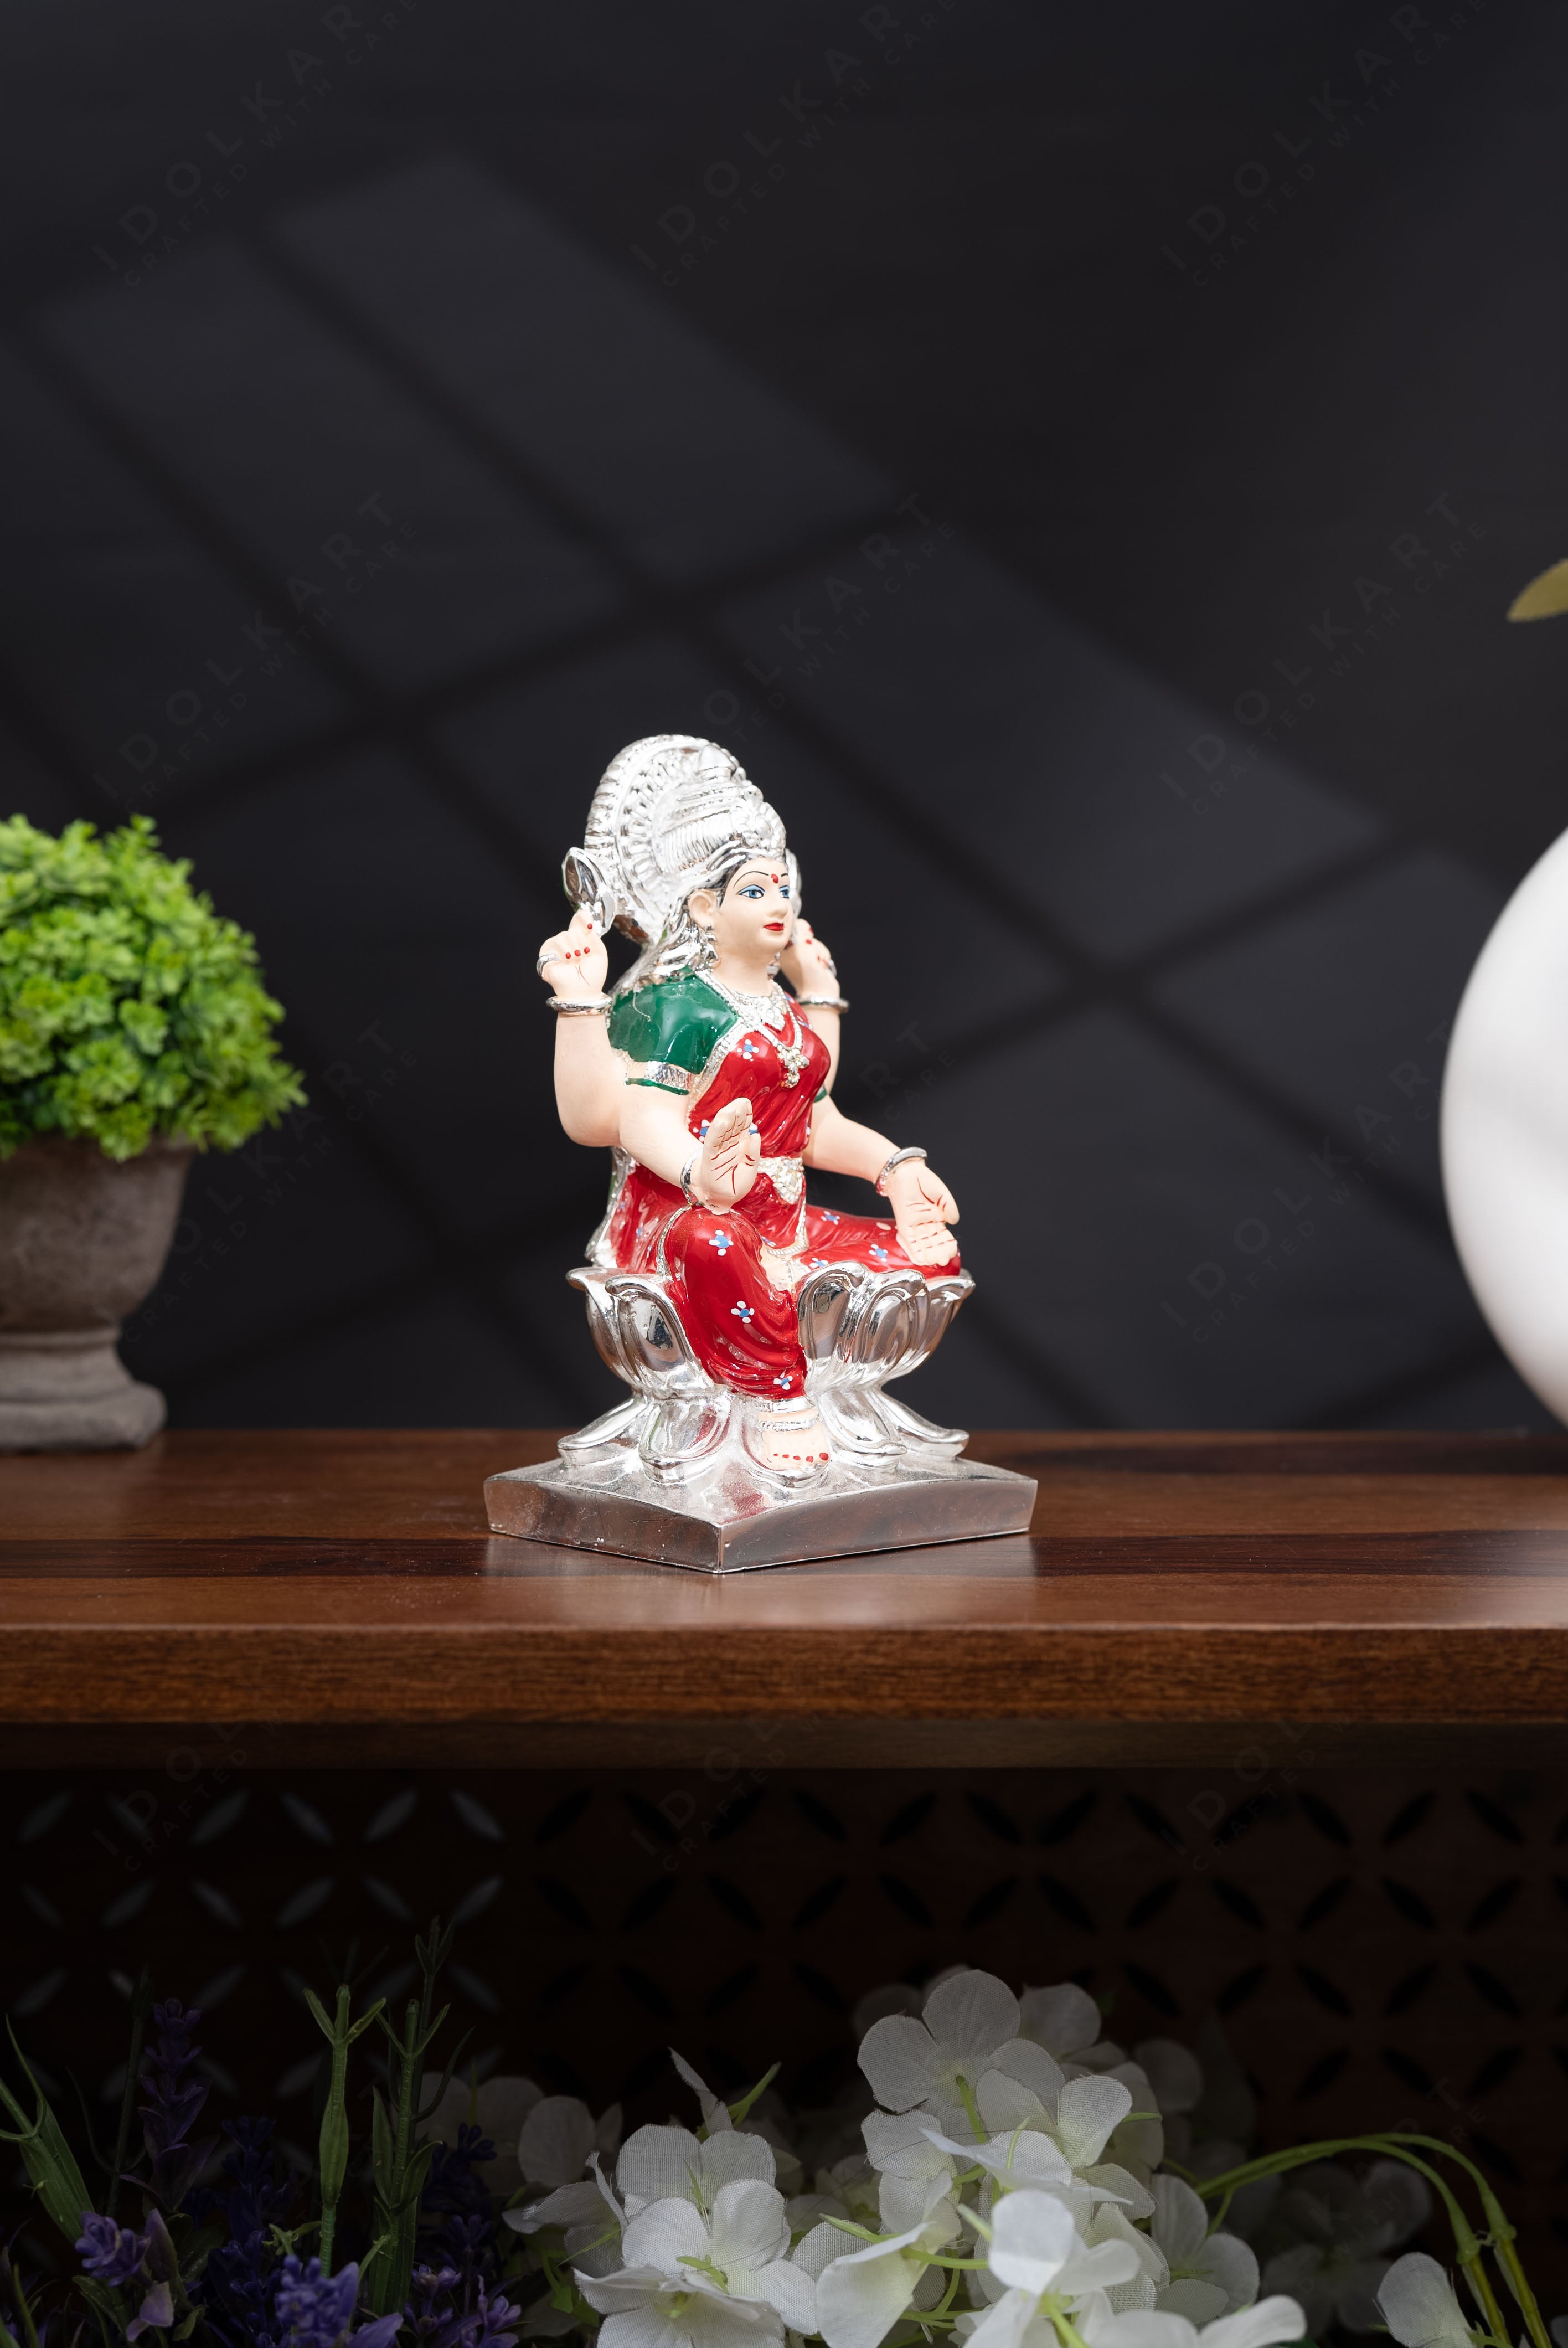 7 Inch Silver Coated Lakshmi Idol | Laxmi Murti in red saree | Silver Lakshmi Idol | Laxmi Idol For Home | Silver Idols for Gift